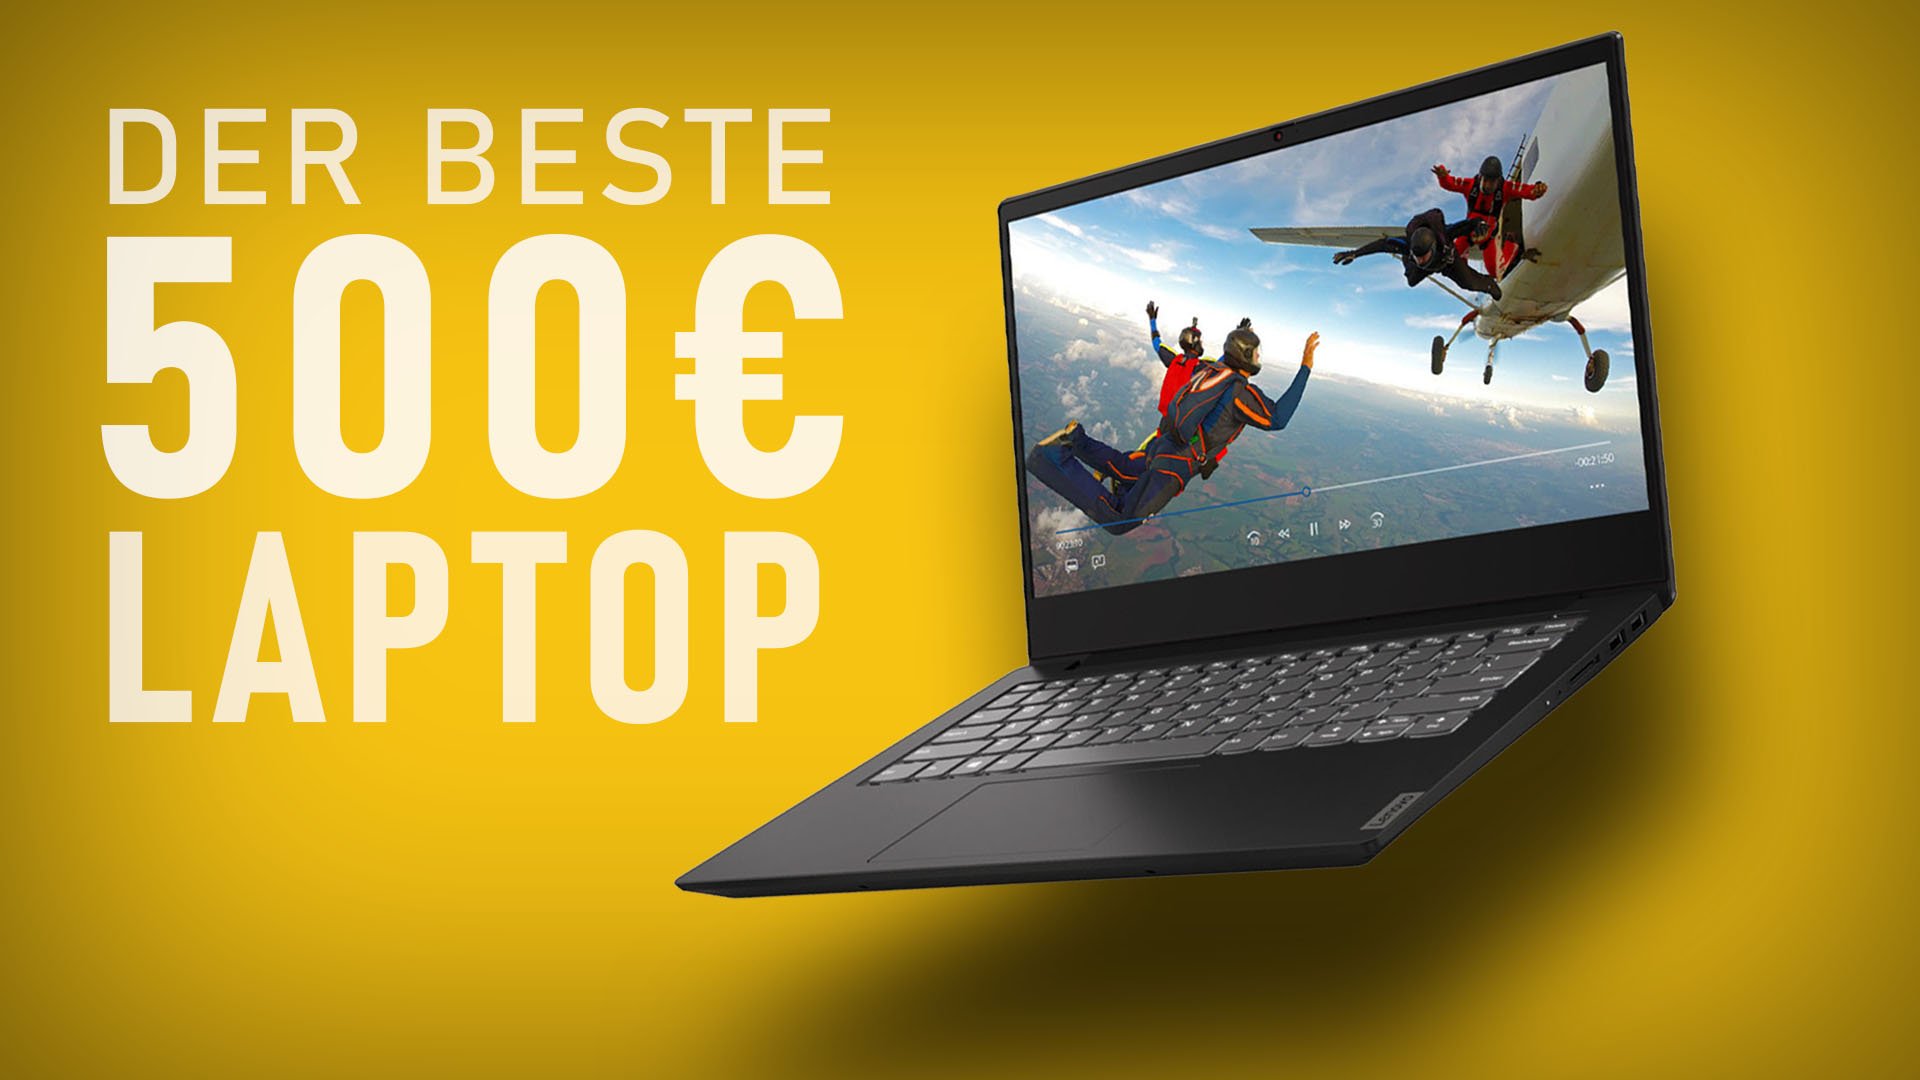 Lenovo IdeaPad S340 14 Test Teil 1: Der beste 500 Euro Laptop